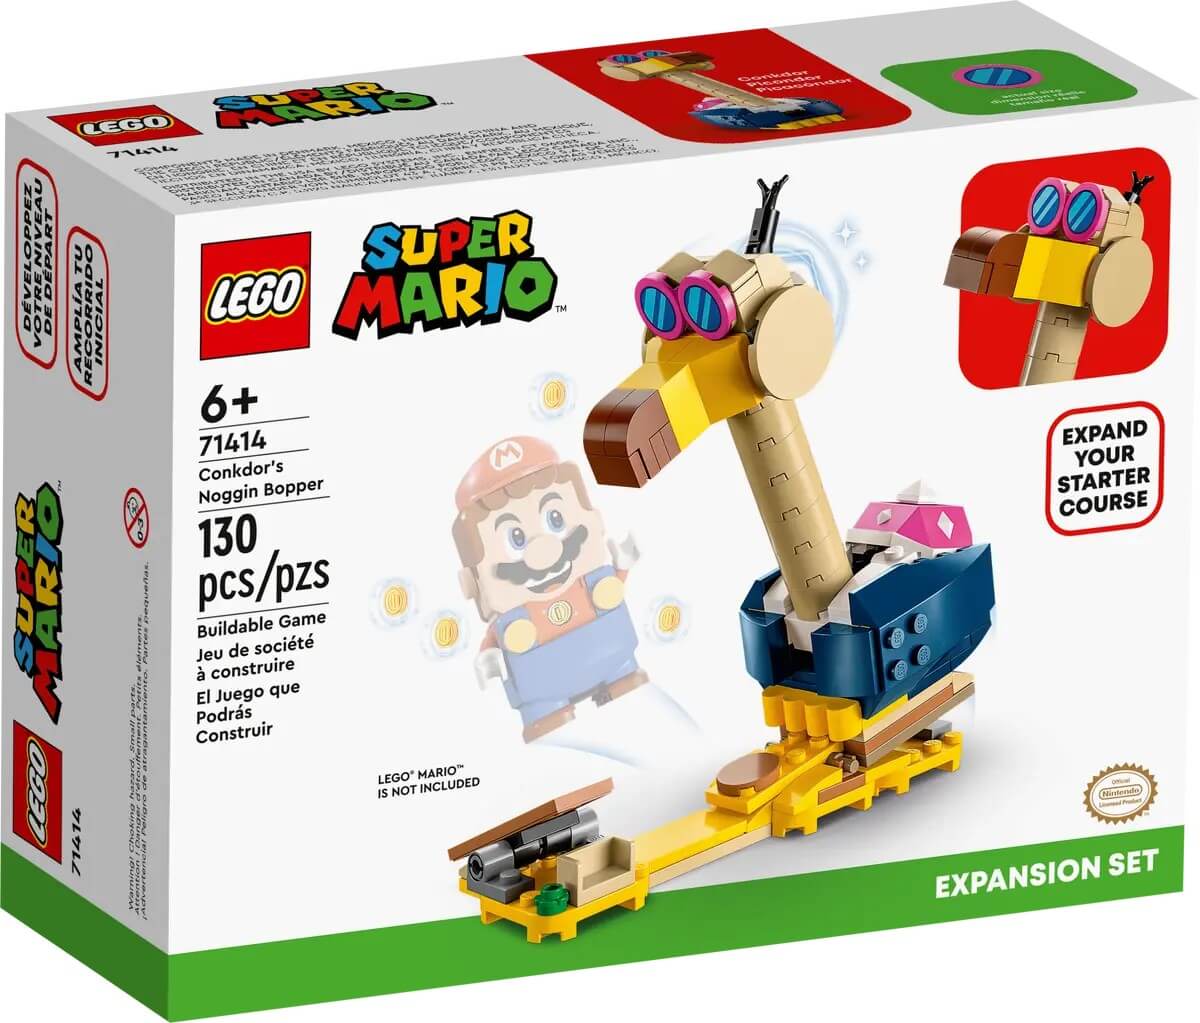 Фигурка-конструктор Lego Super Mario Conkdor's Noggin Bopper Expansion Set 71414, 130 деталей lego 71408 peach’s castle expansion set